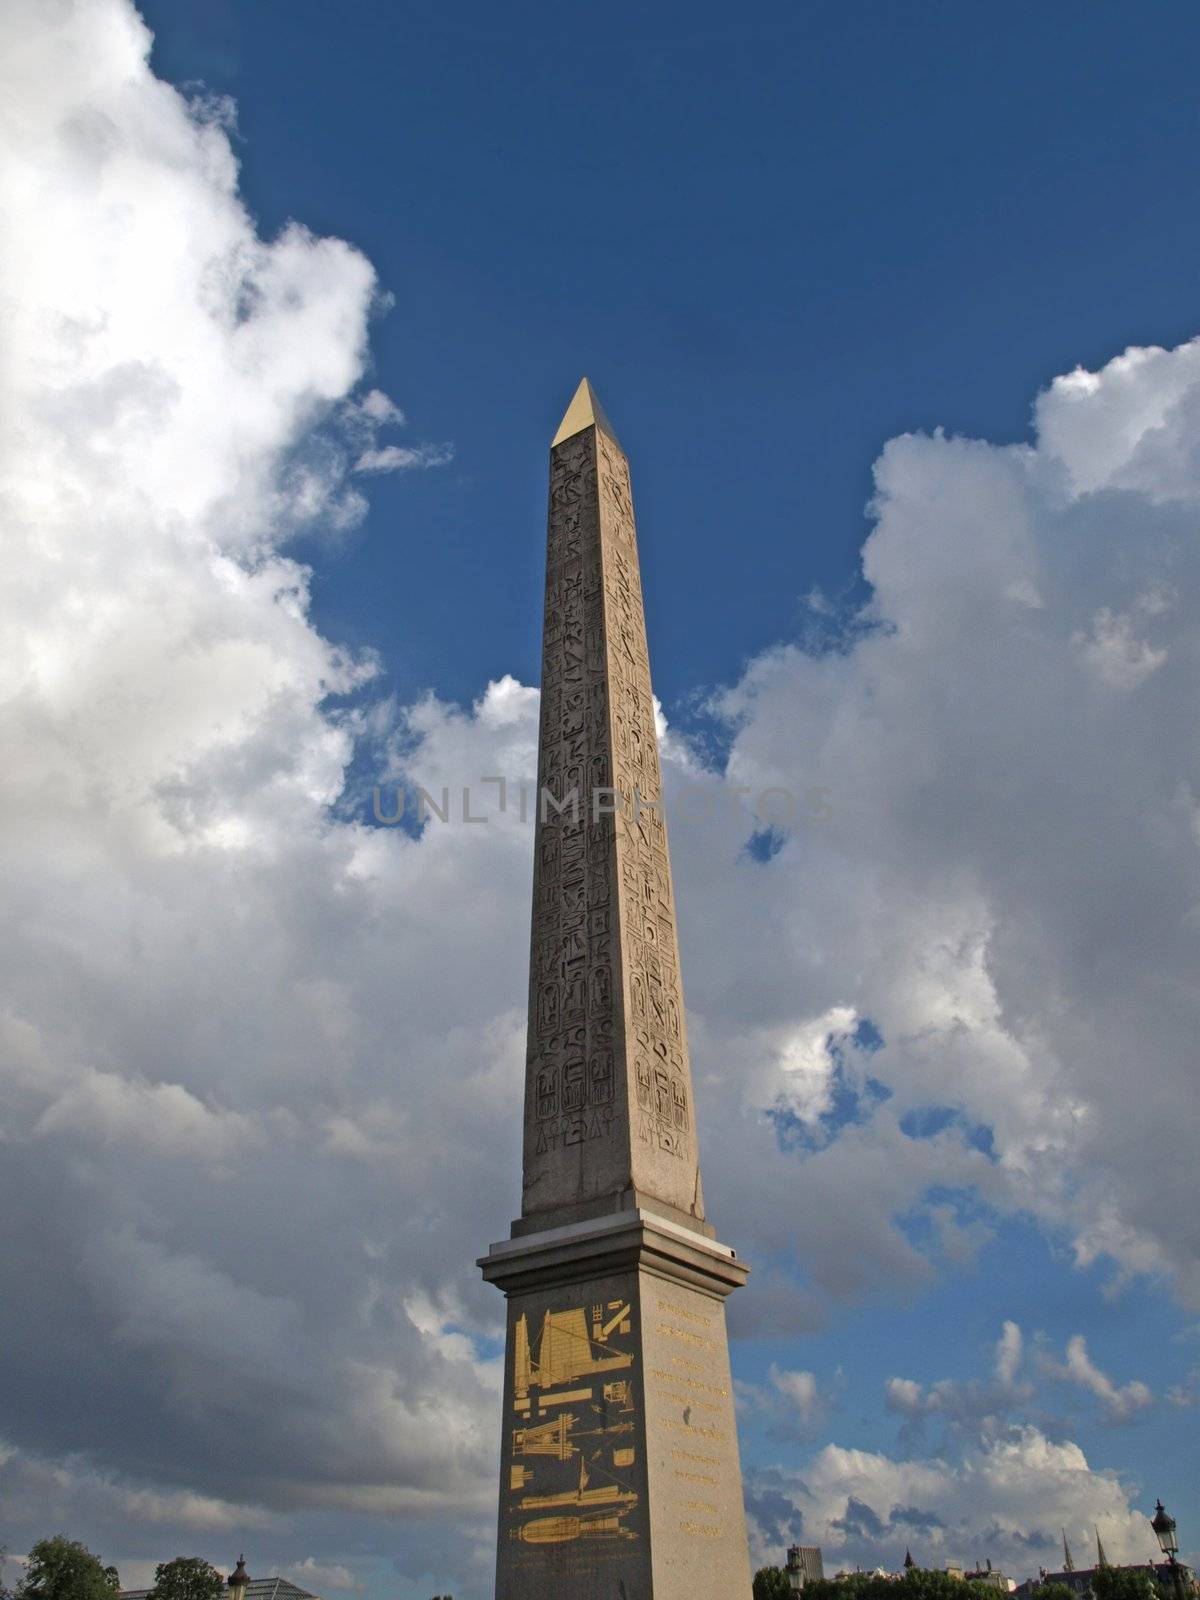 Paris - the obelisk in Concorde Square